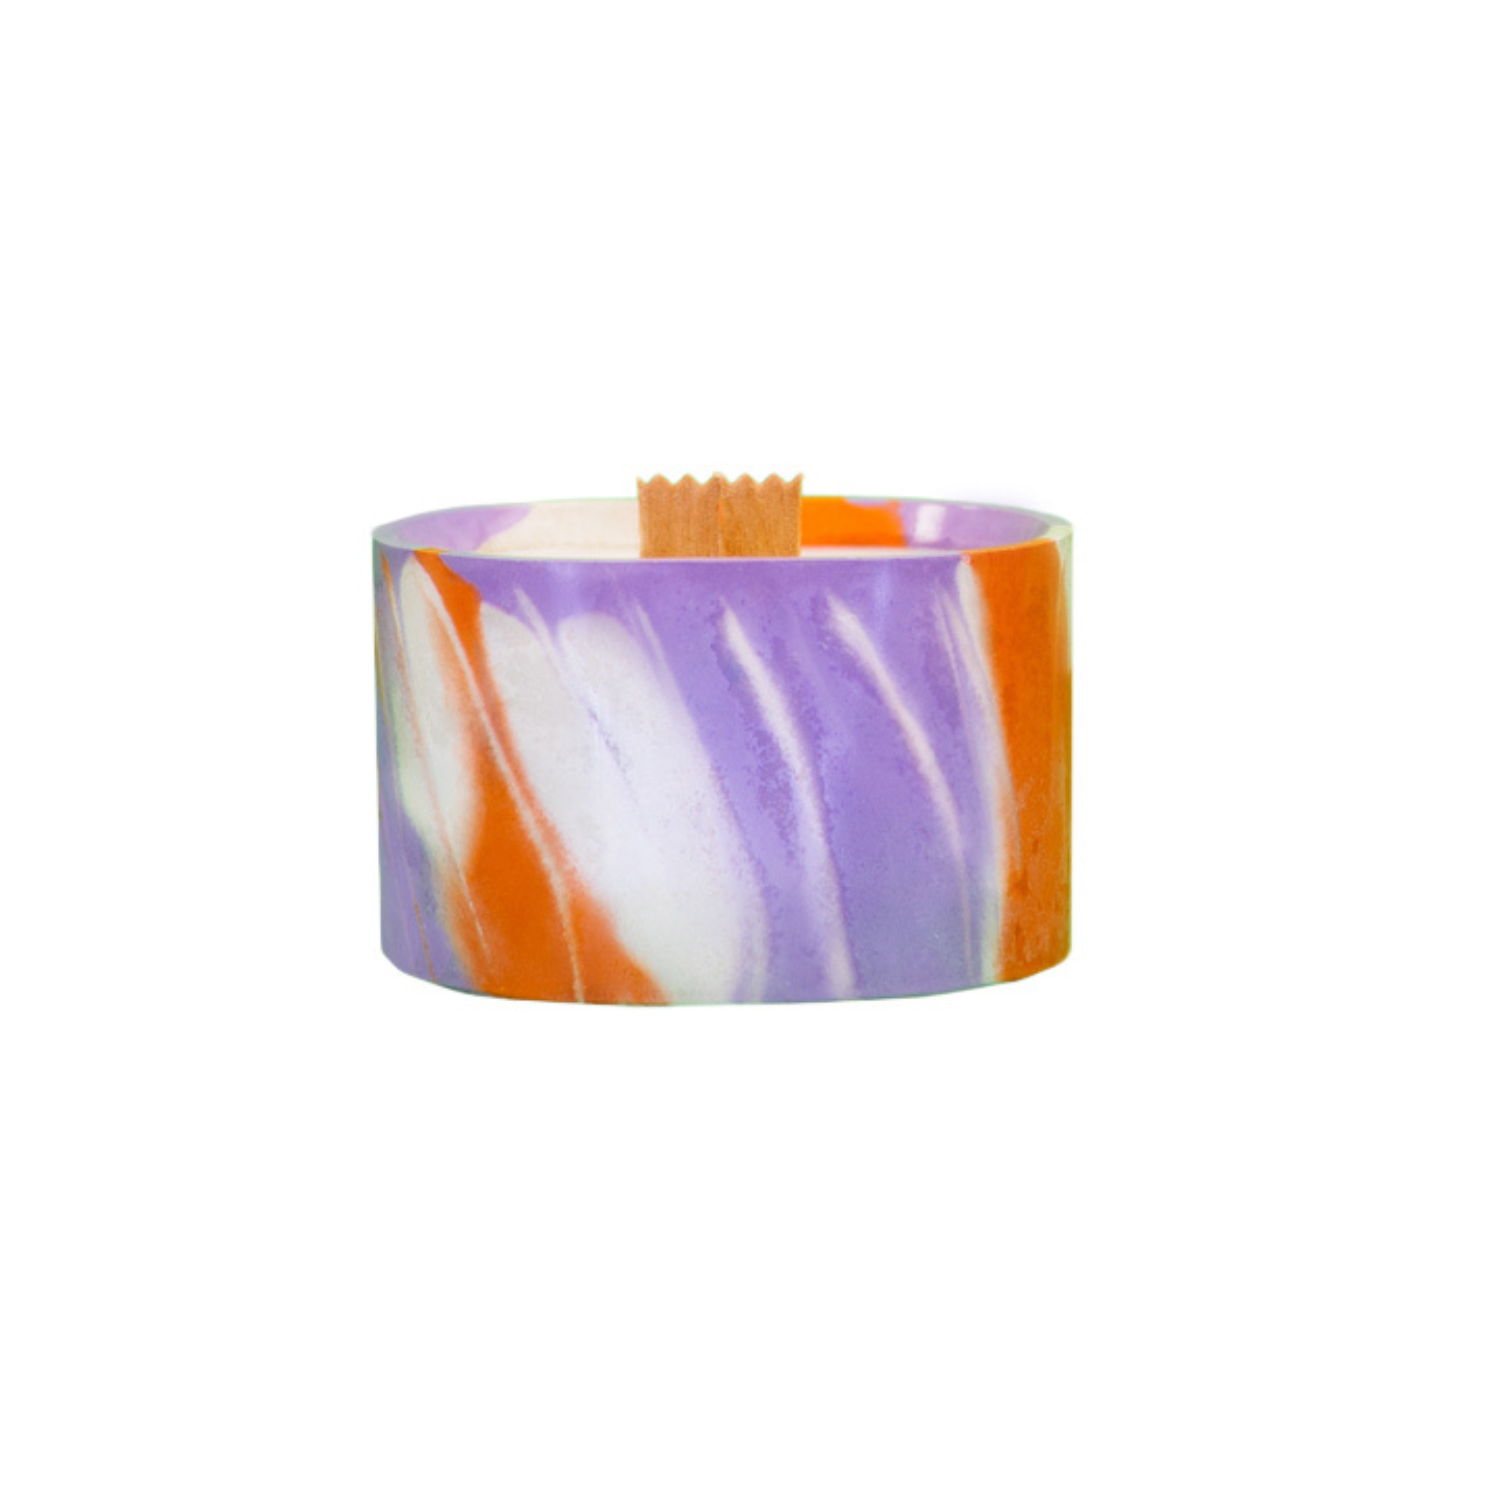 Bougie ovale - Béton Tie&Dye orange et lilas